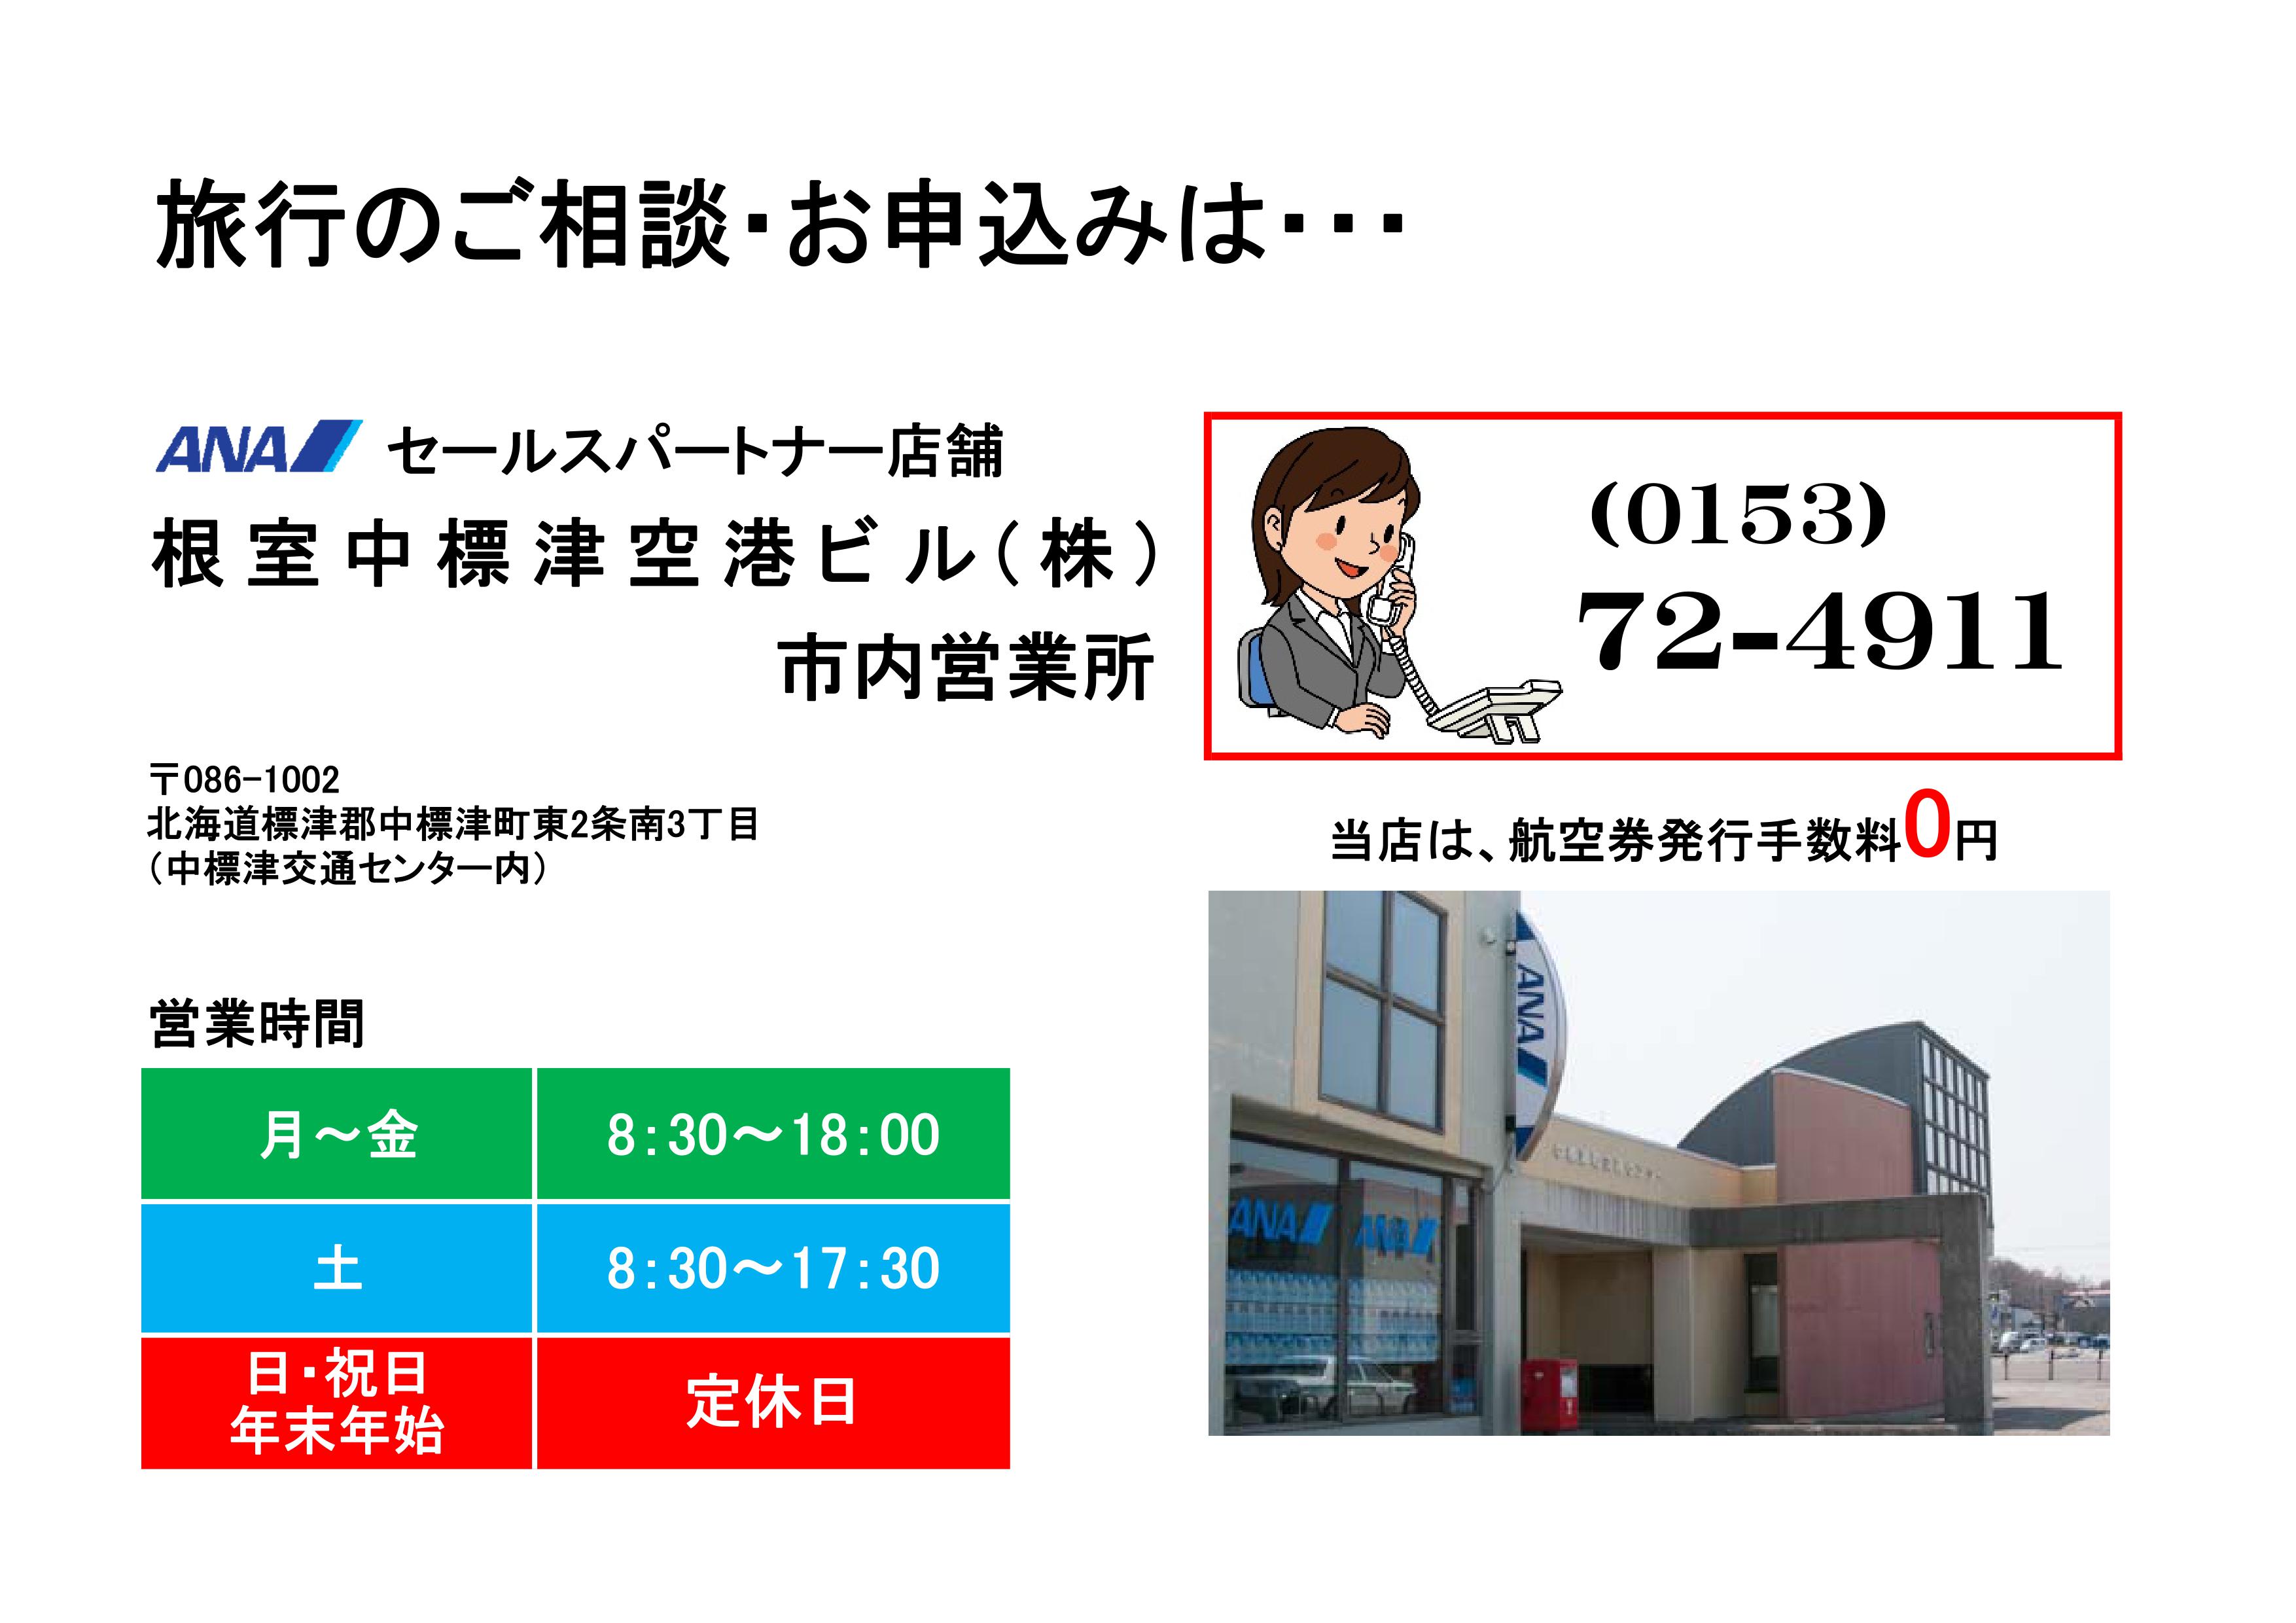 http://www.nakashibetsu-airport.jp/%E5%96%B6%E6%A5%AD%E6%99%82%E9%96%93%E6%8E%B2%E8%BC%89%282017%29.jpg